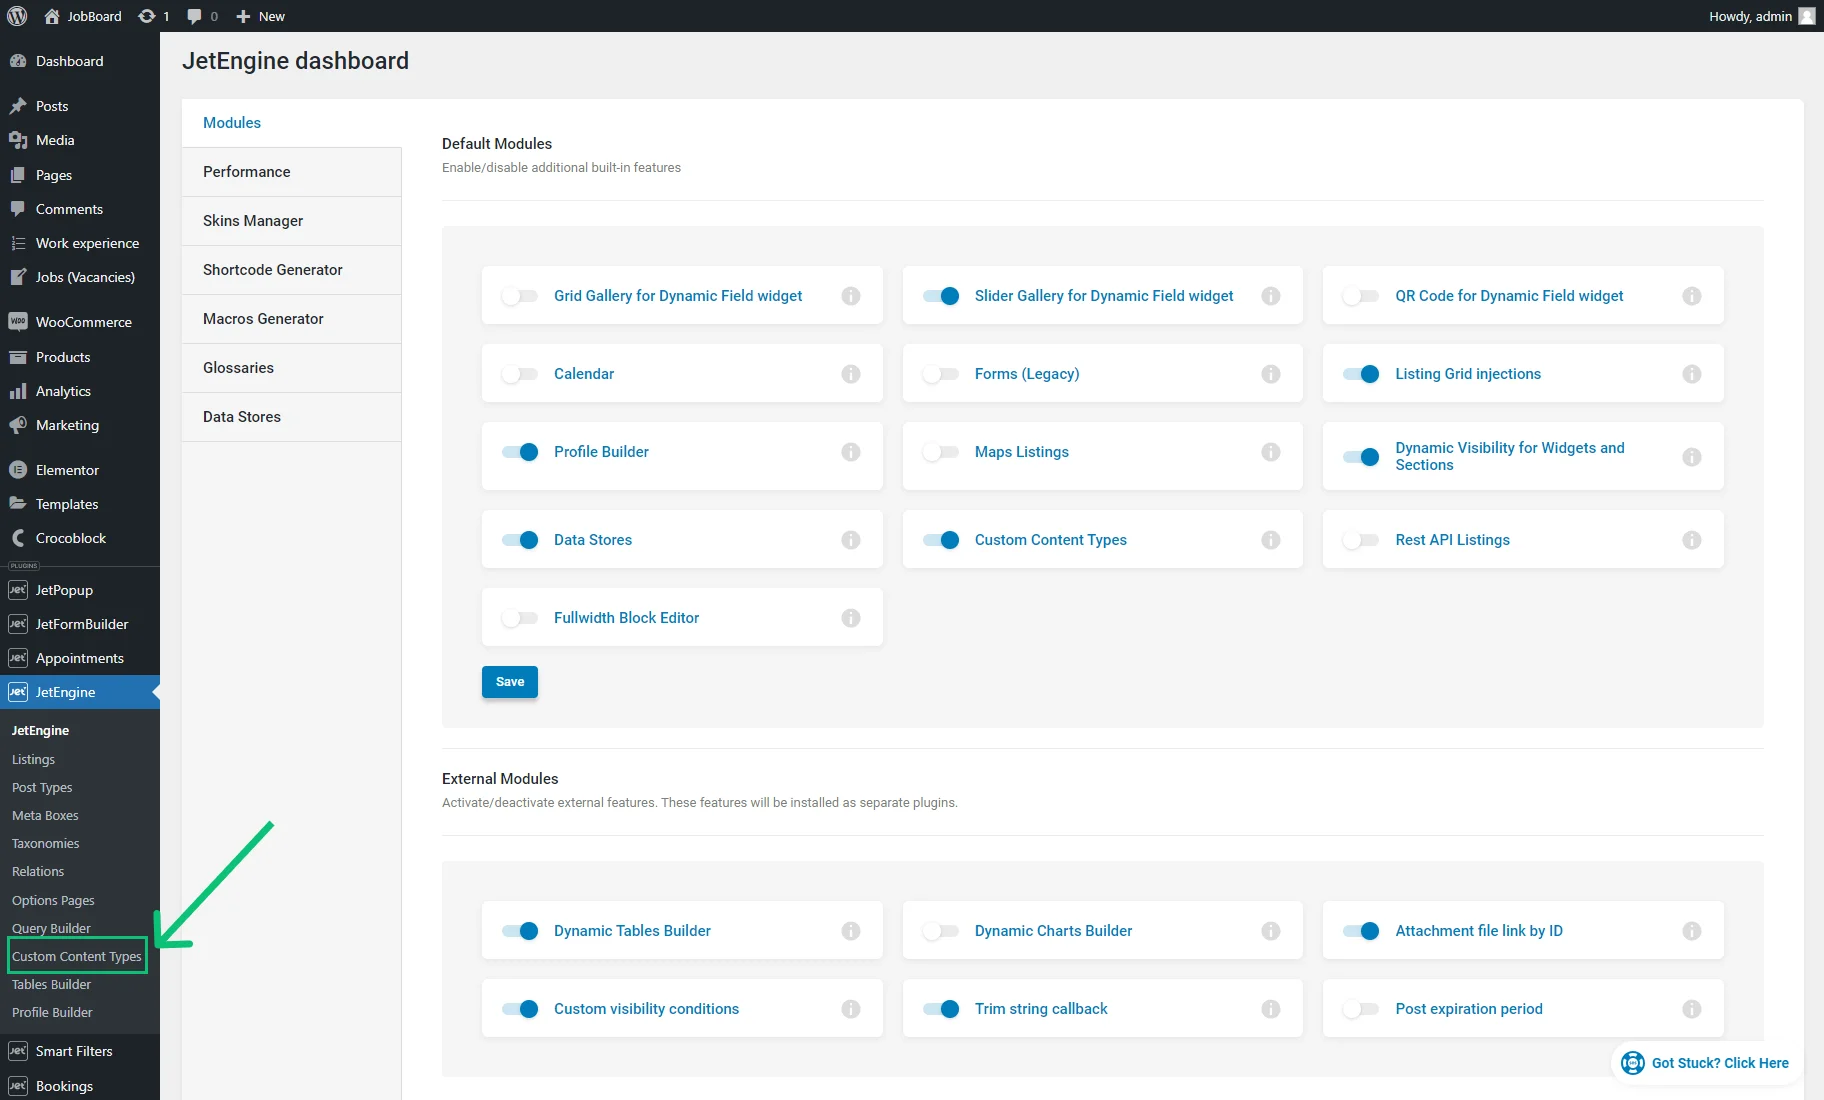 Custom Content Types tab on the WordPress Dashboard